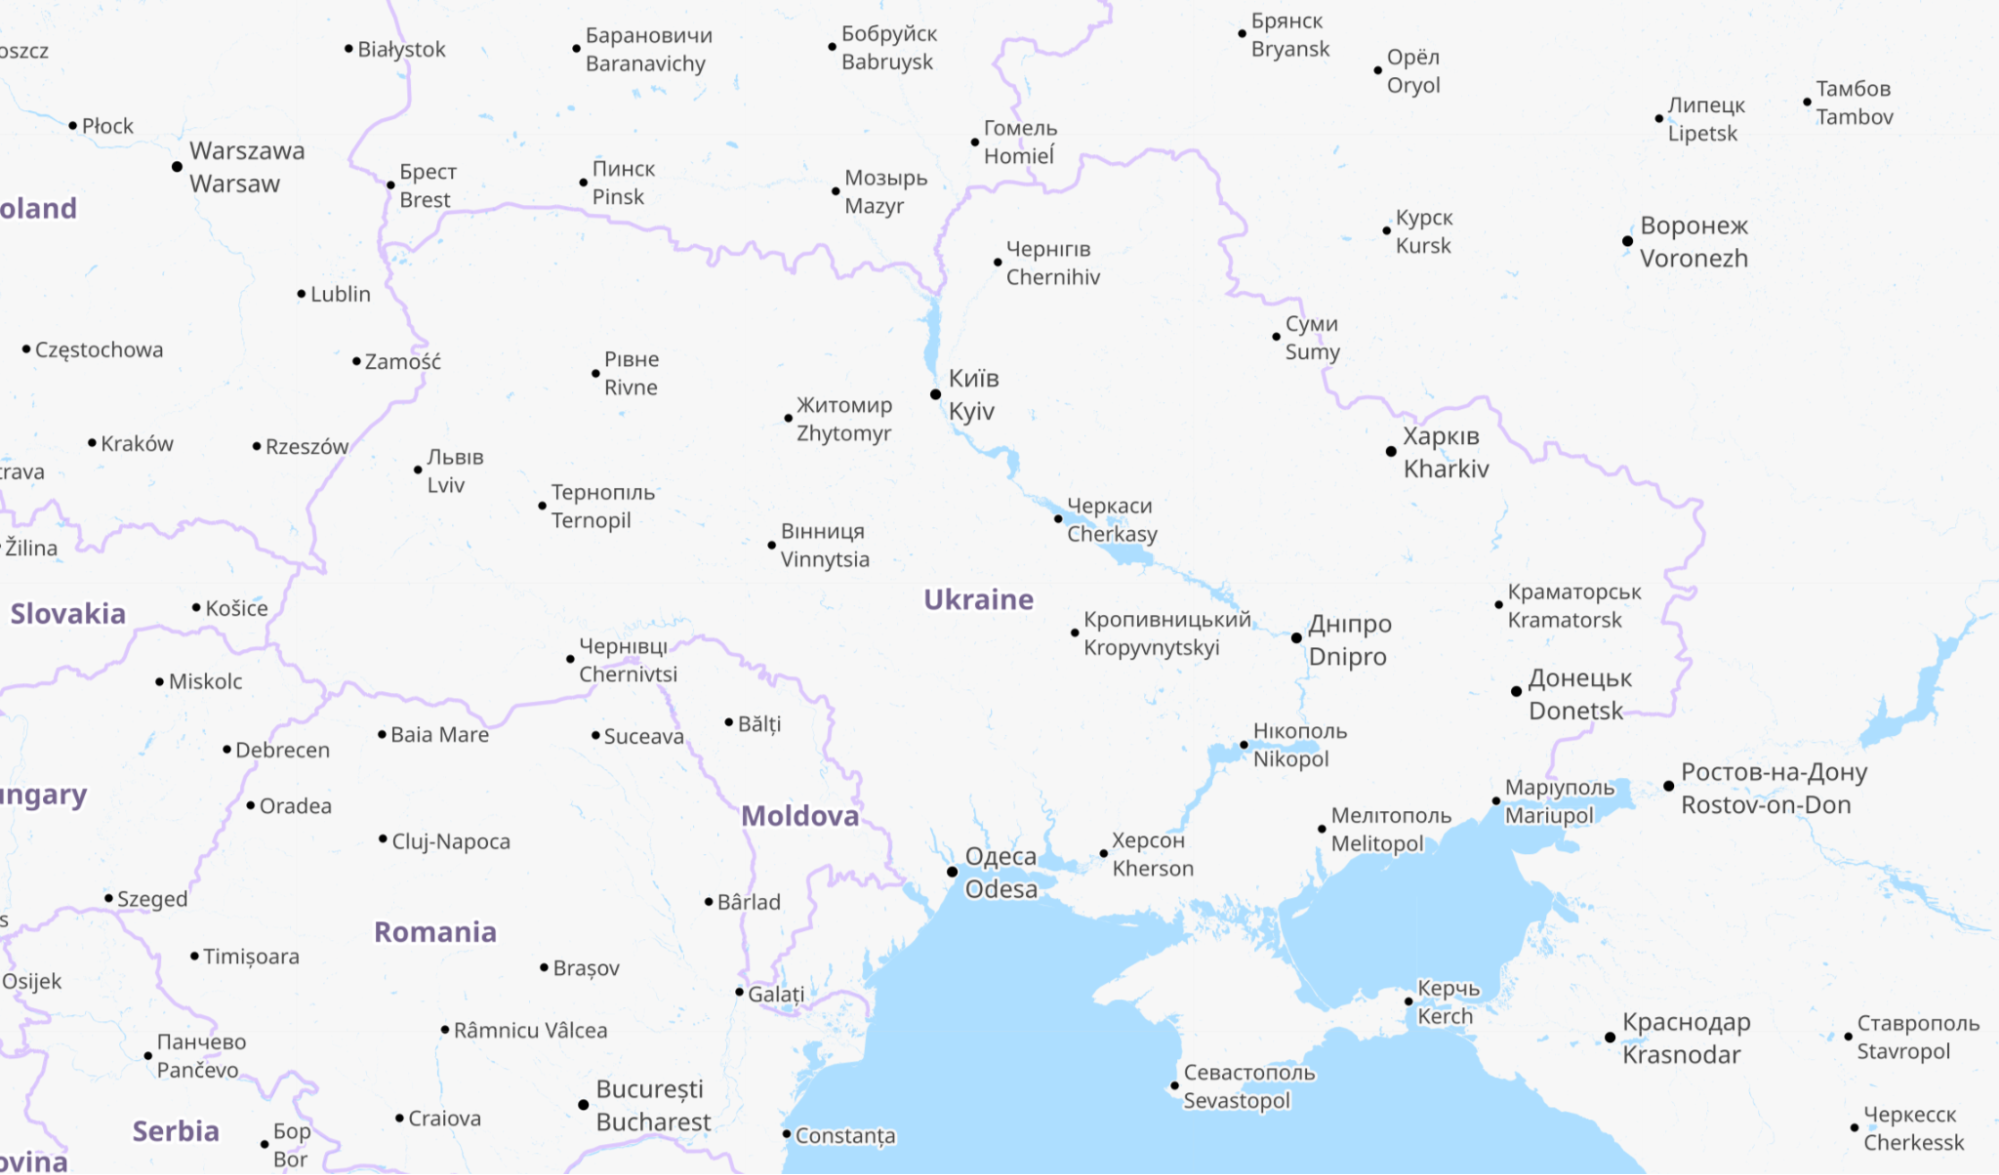 Internet traffic patterns in Ukraine since February 21, 2022